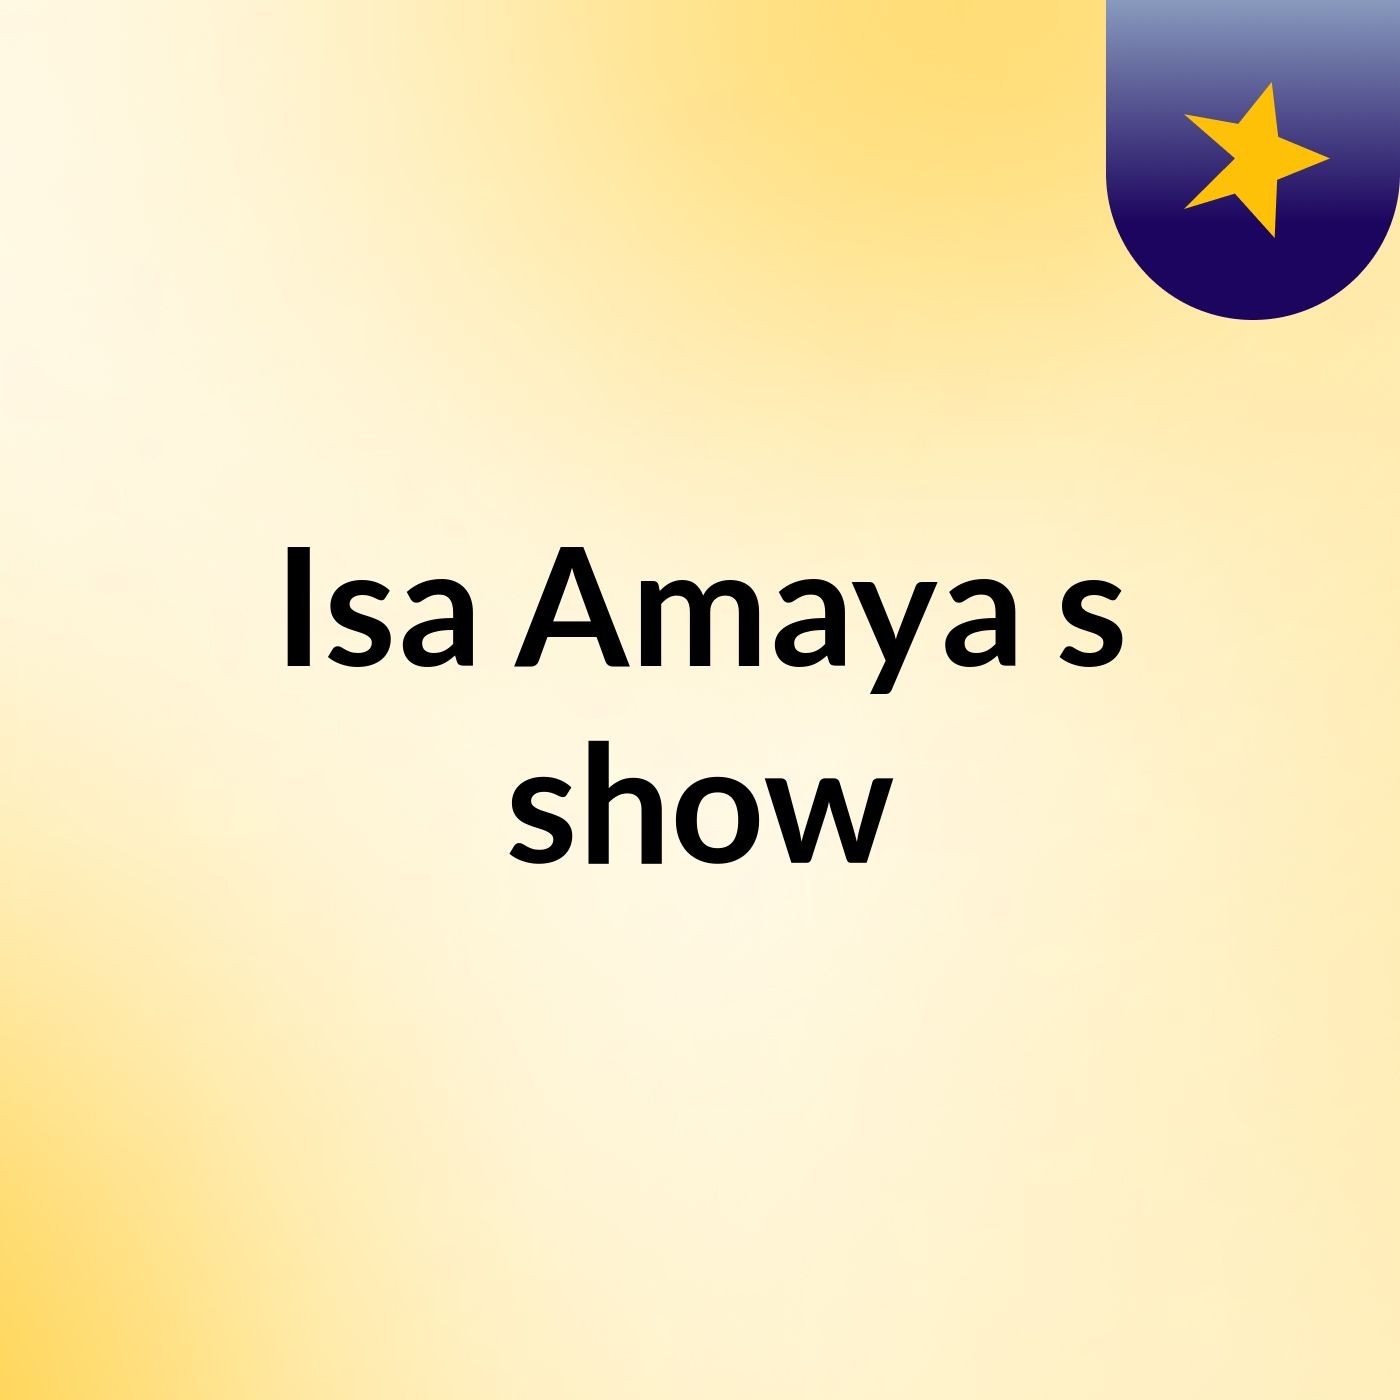 Isa Amaya's show